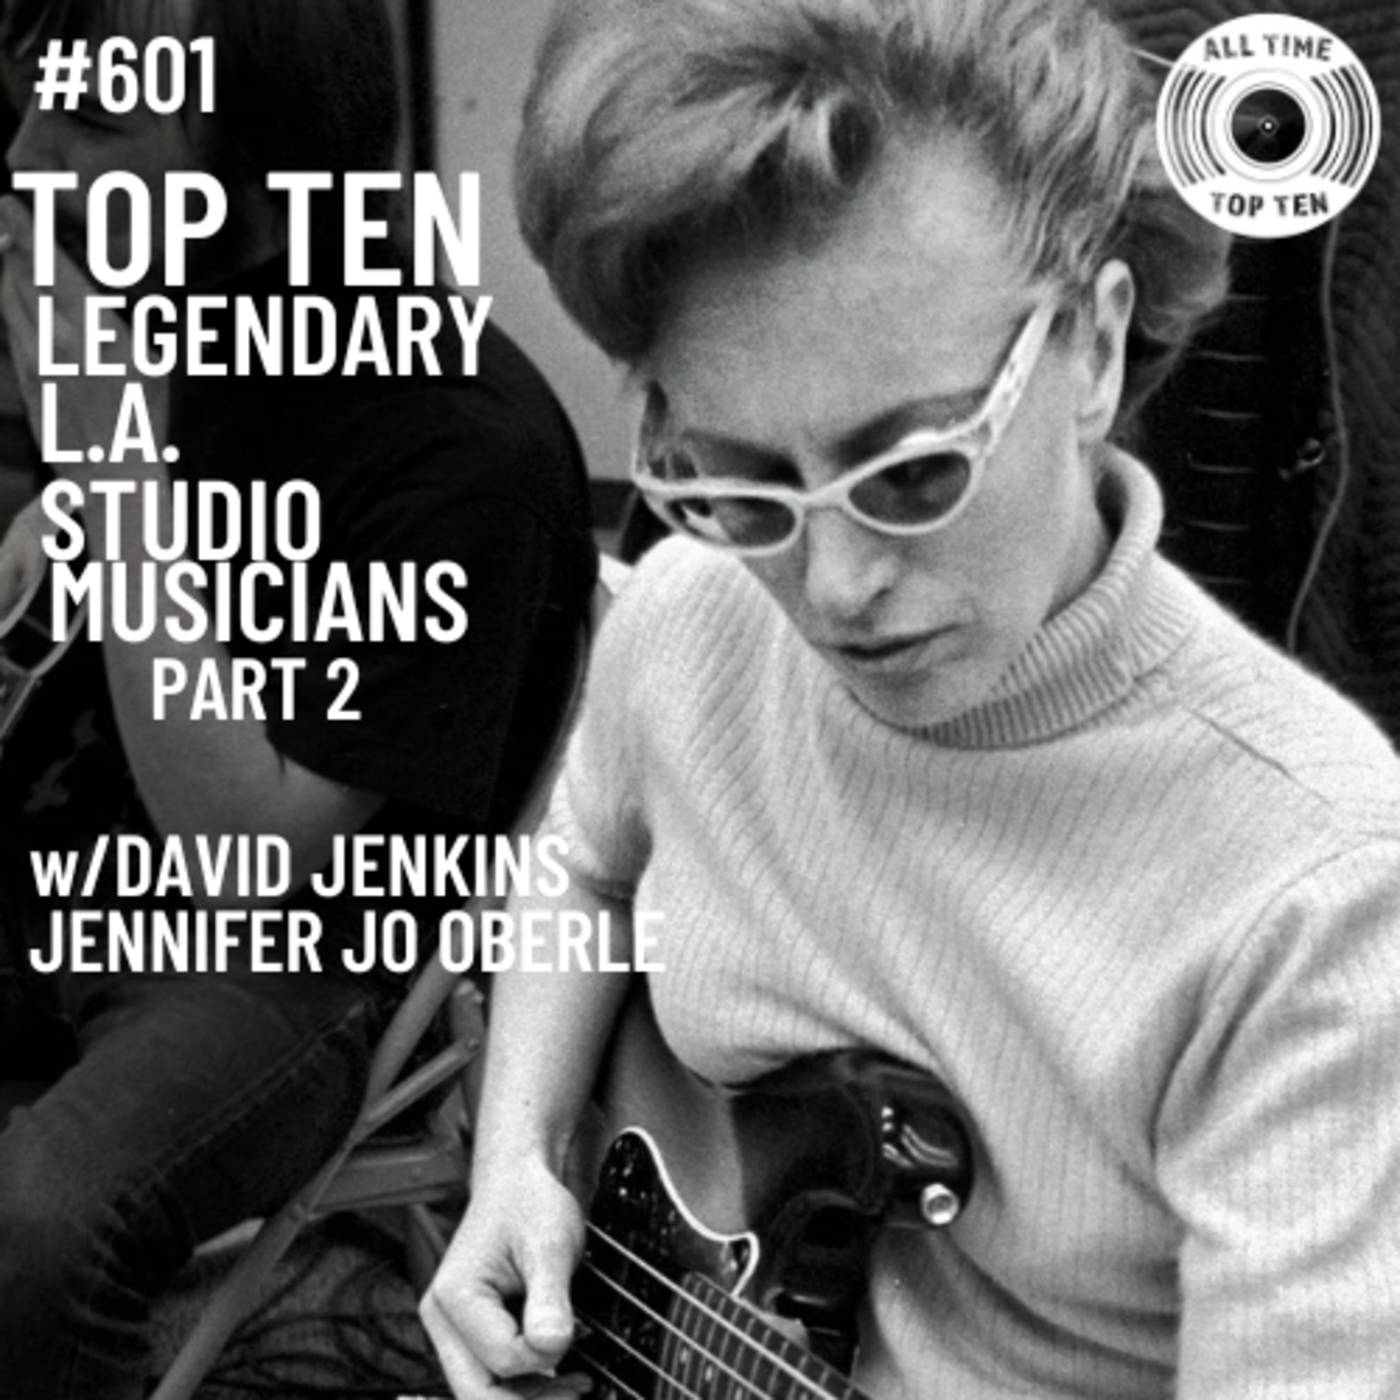 Episode 601 - Top Ten Legendary L.A. Studio Musicians Part 2 w/David Jenkins & Jennifer Jo Oberle